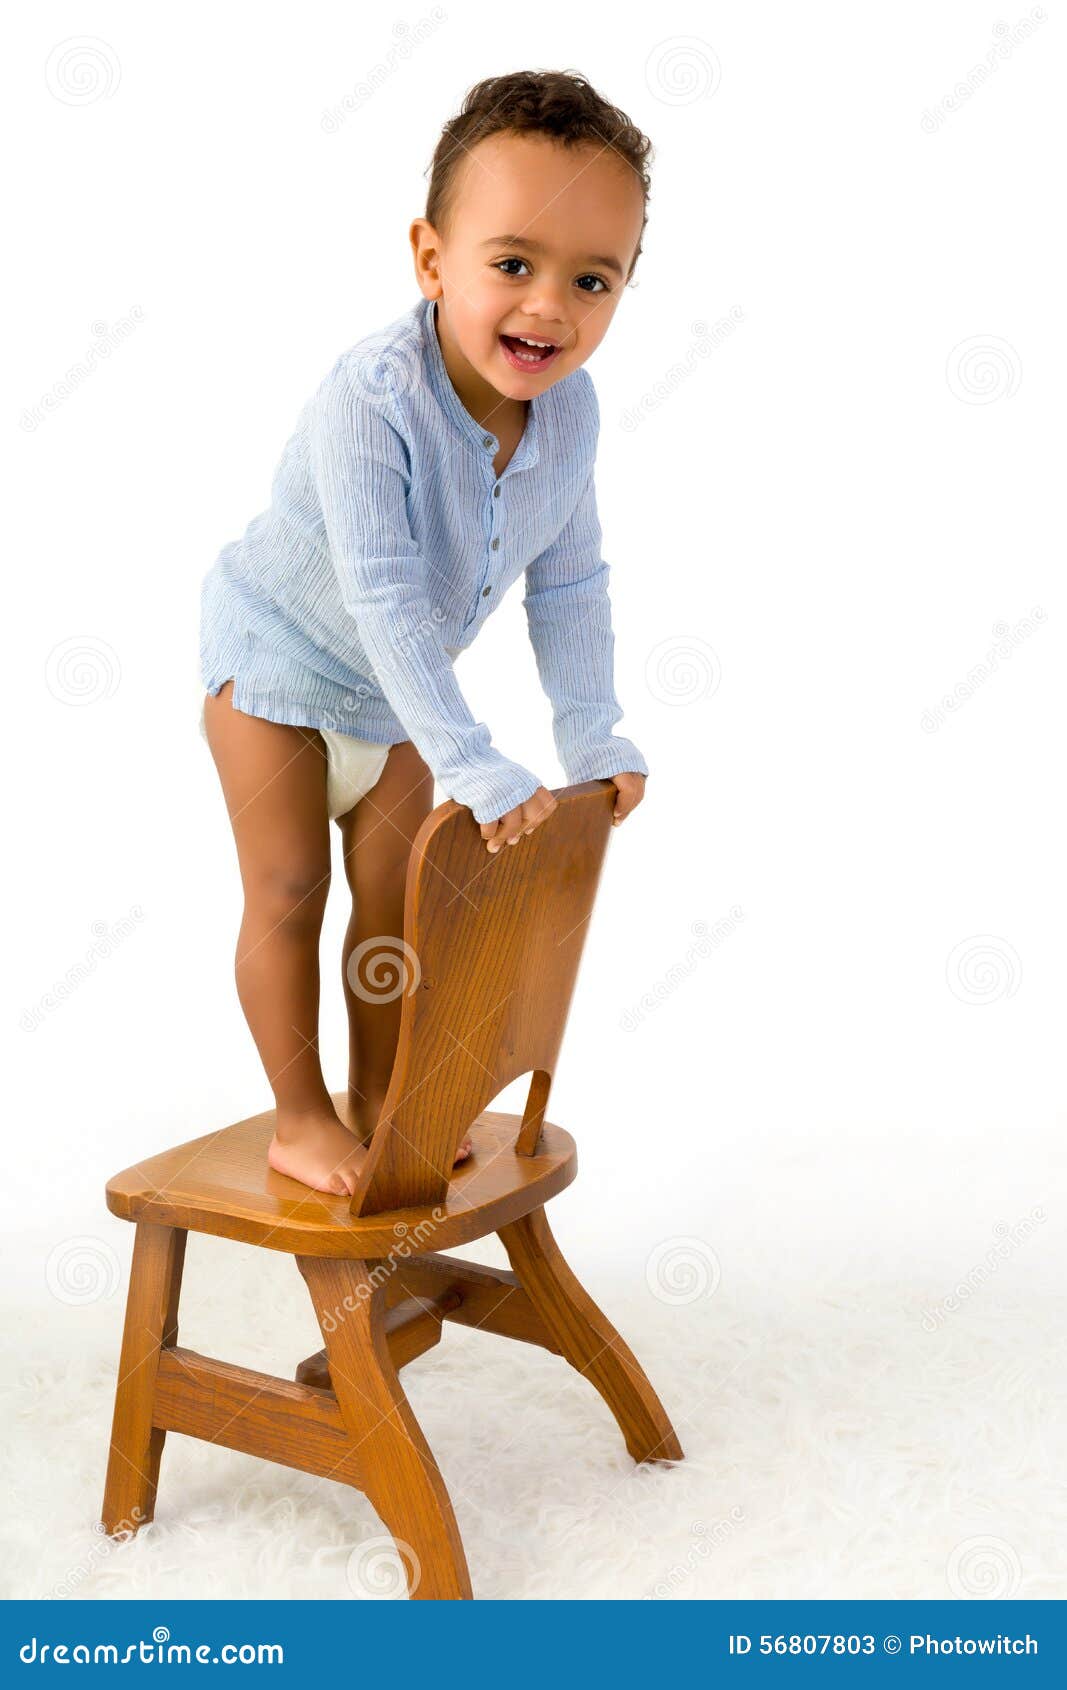 Toddler Climbing Chair Stock Image Image Of Climbing 56807803